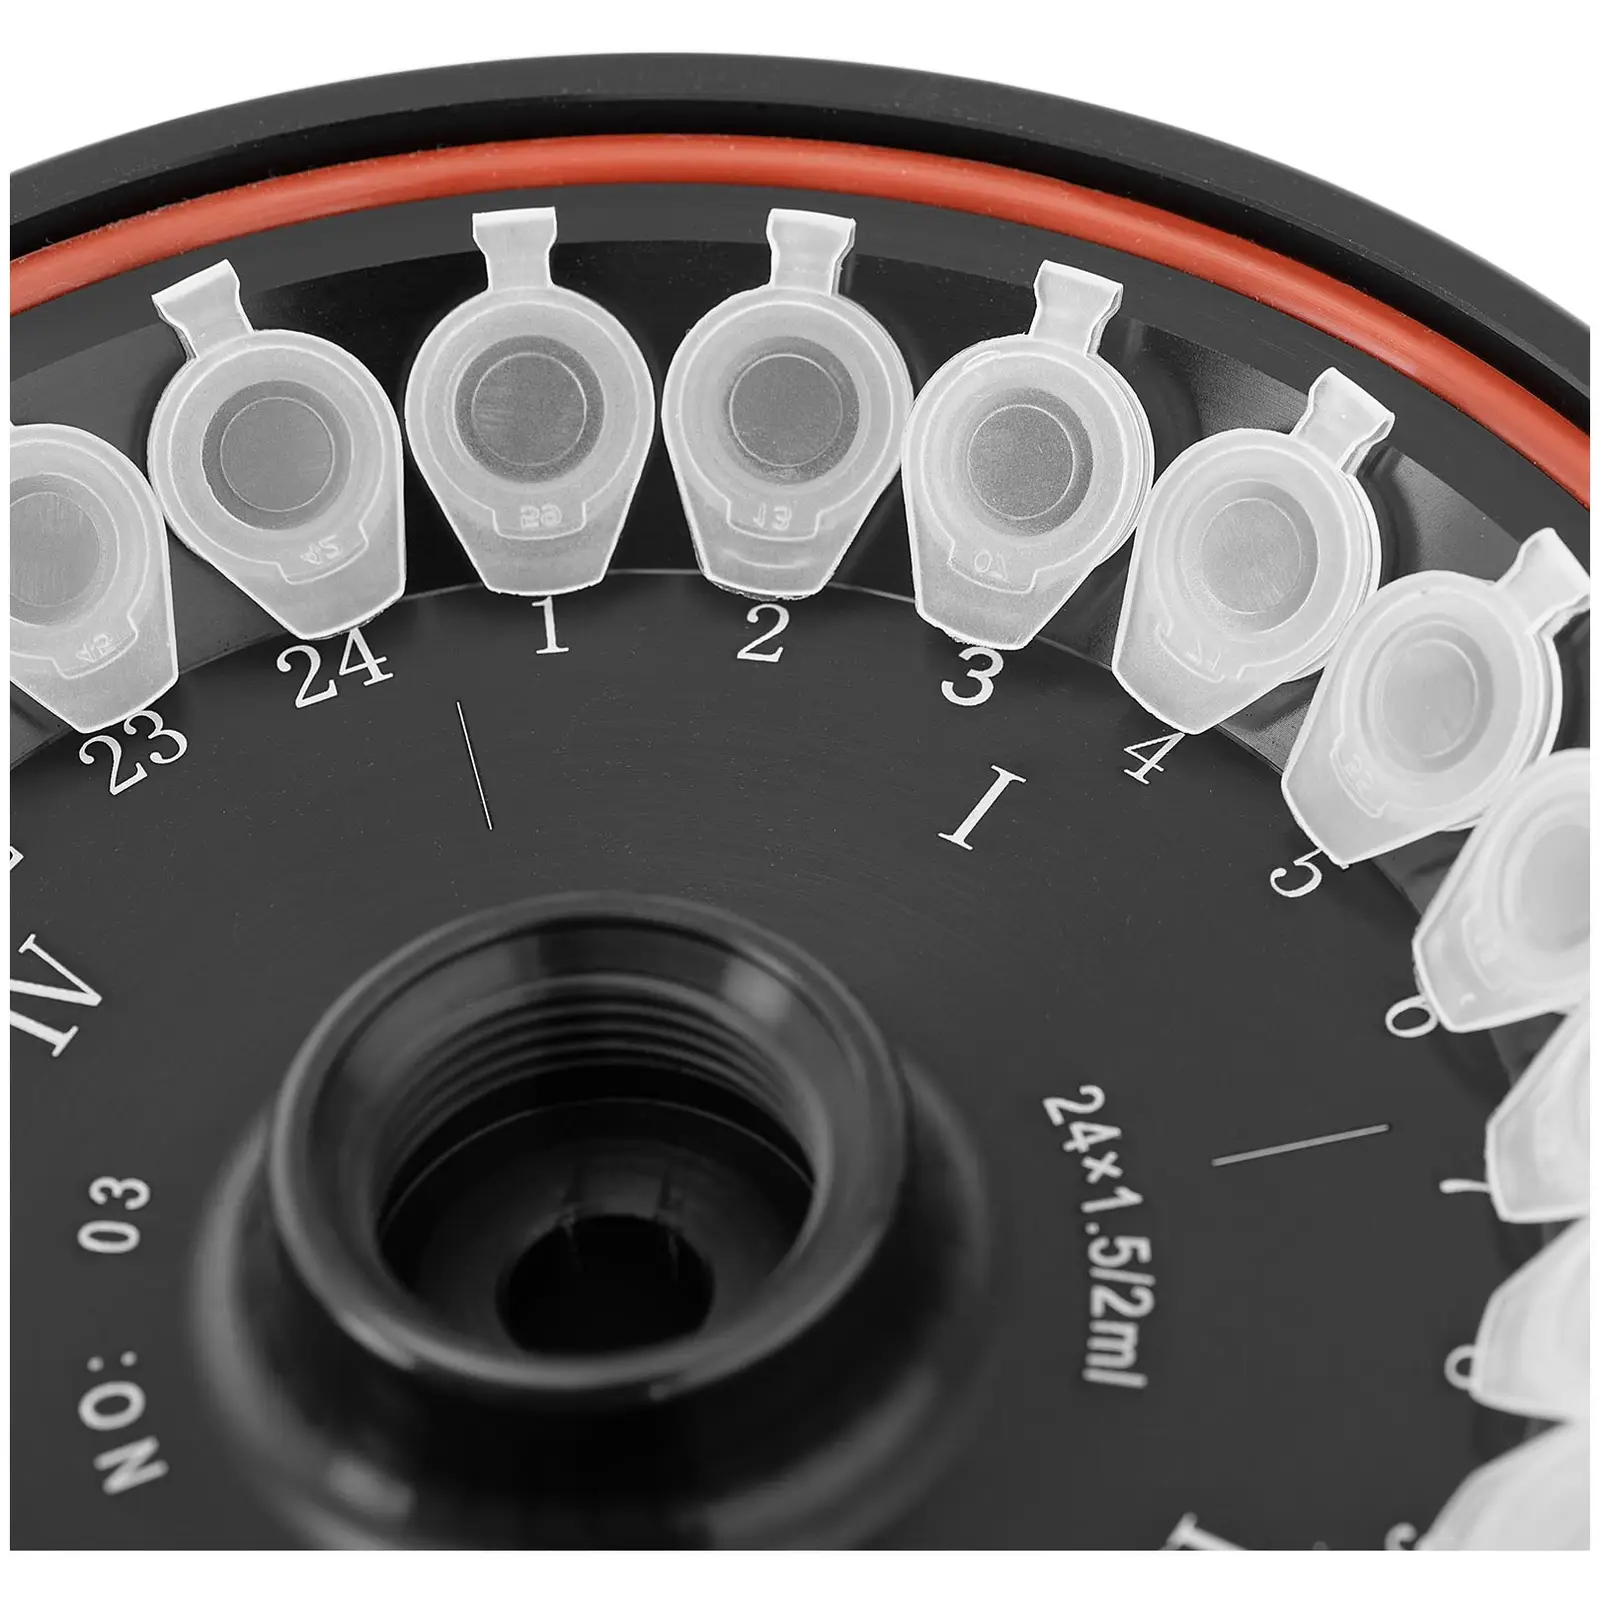 Kit Centrífuga de laboratório - 4 x tiras de tubo 8PCR 0,2 ml - 20600 xg - rotor angular 24 x 1,5/2 ml incluído